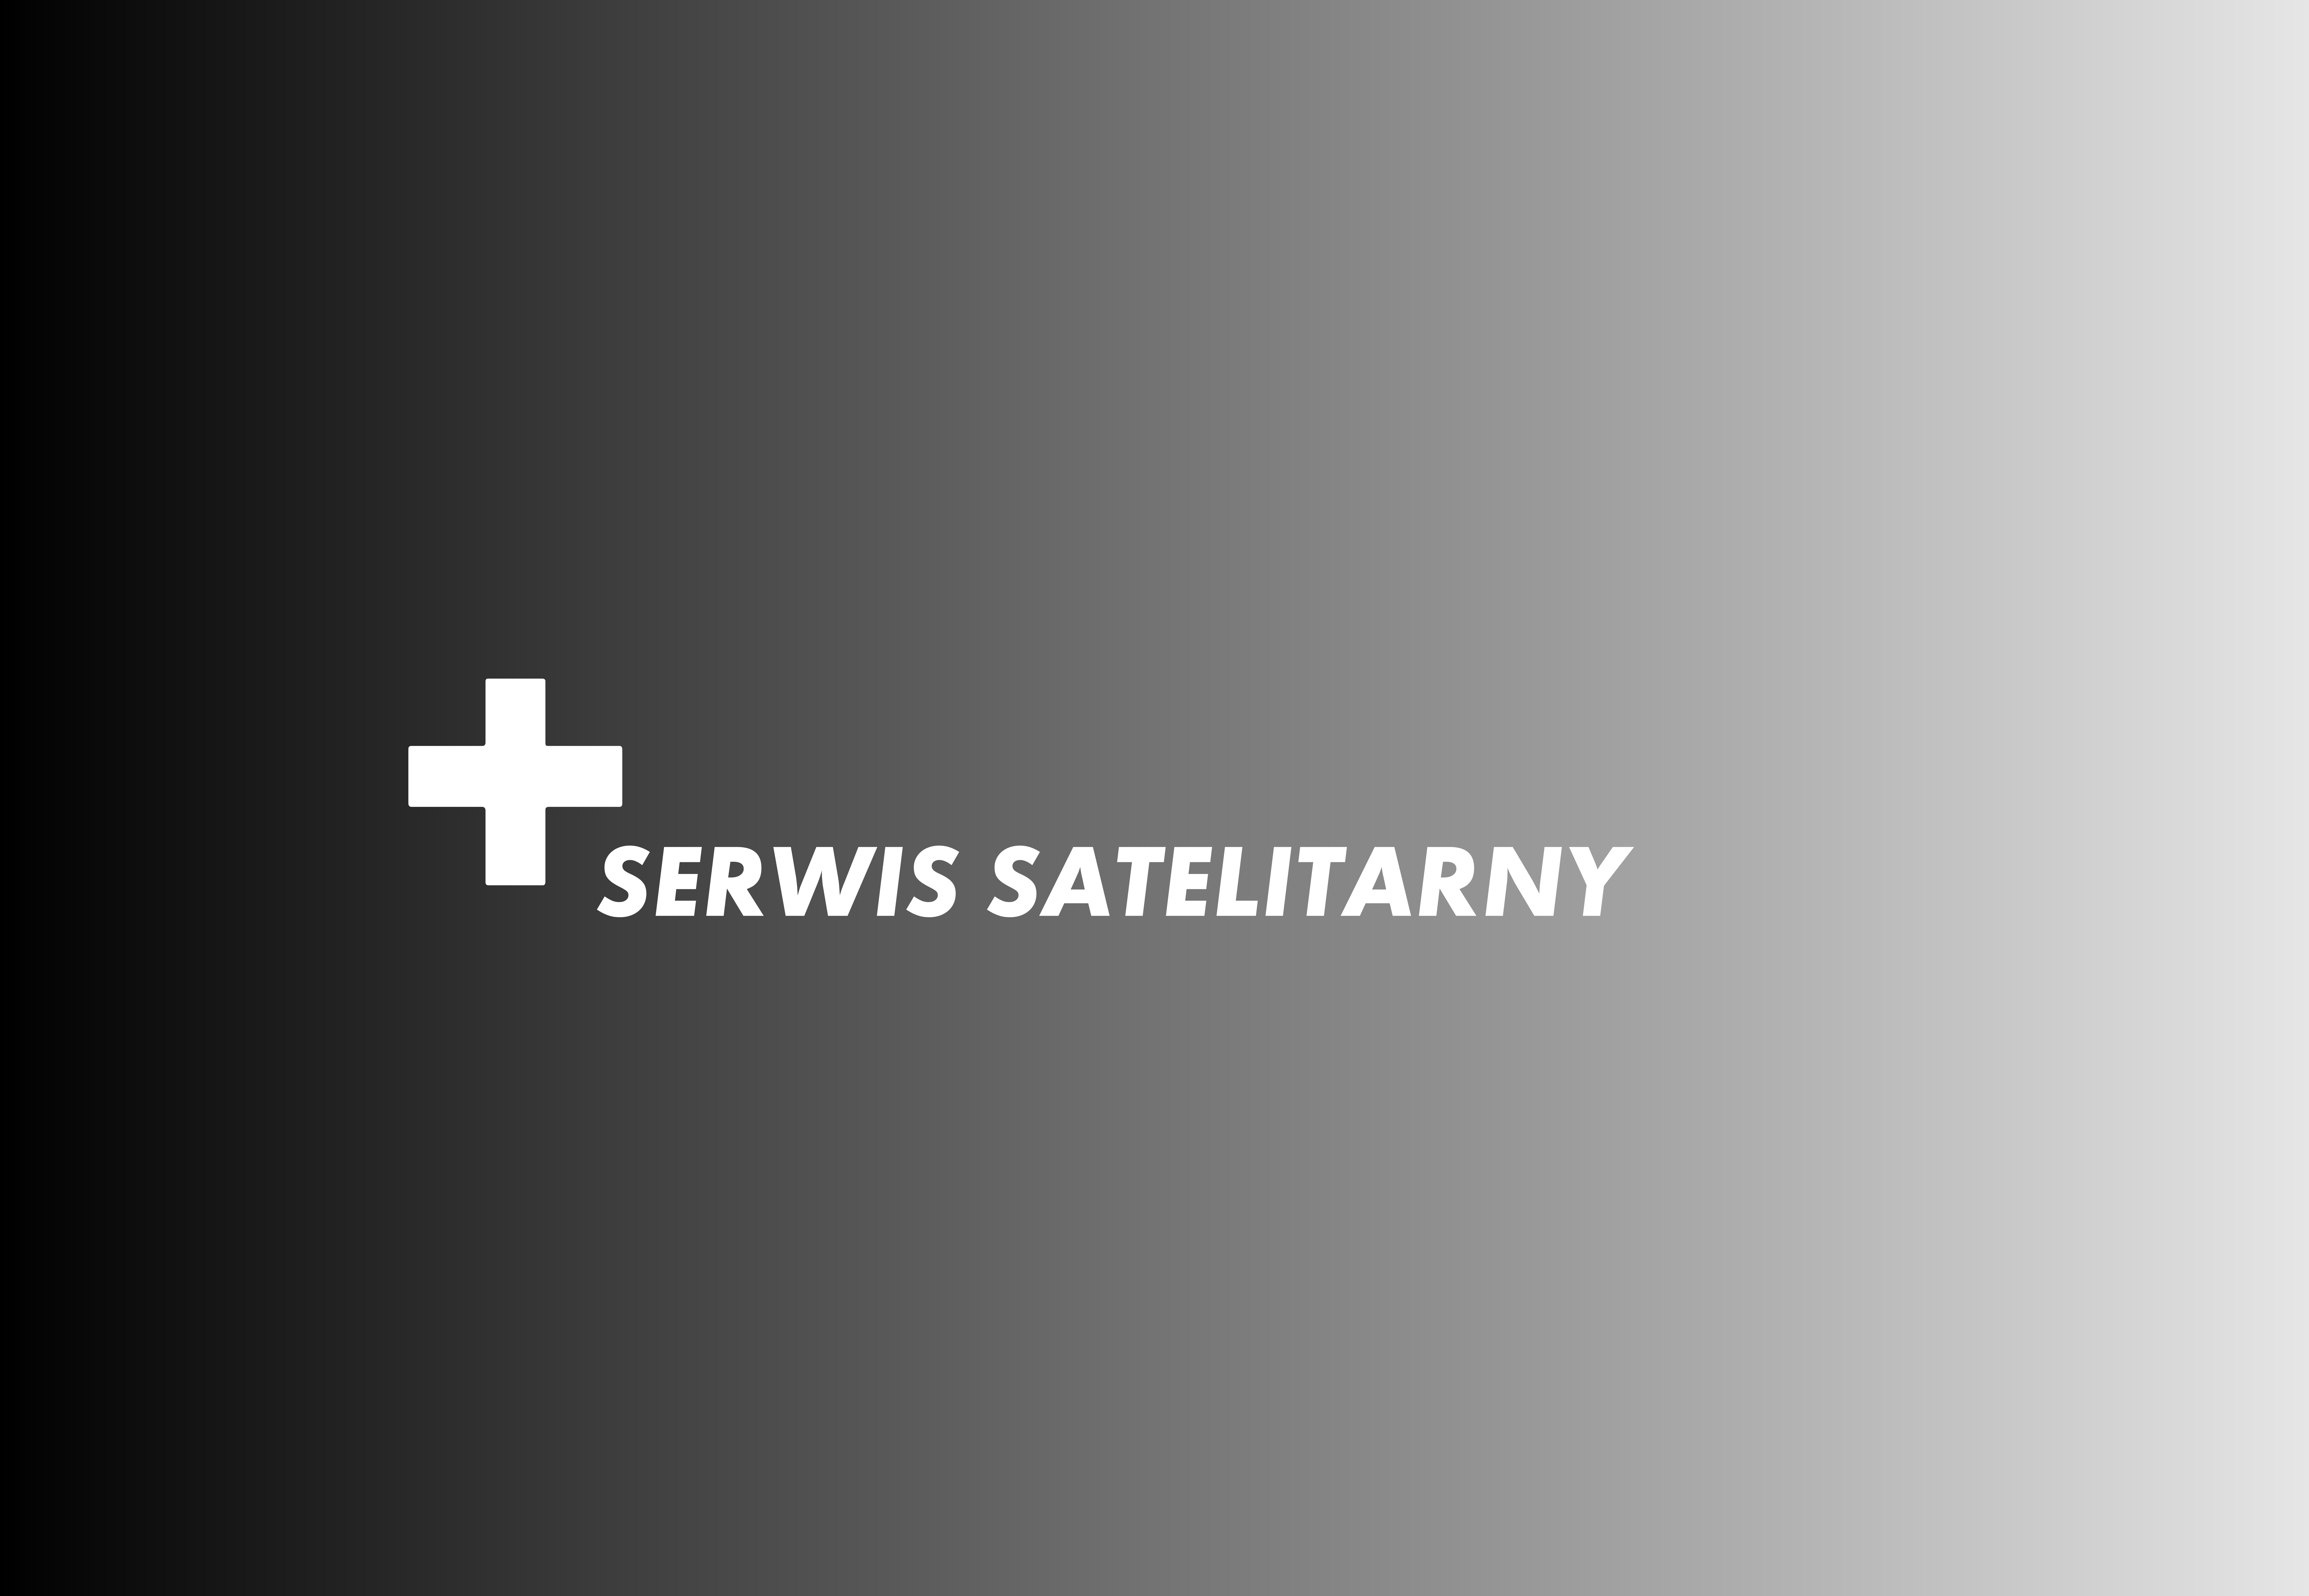 SERWIS SATELITARNY